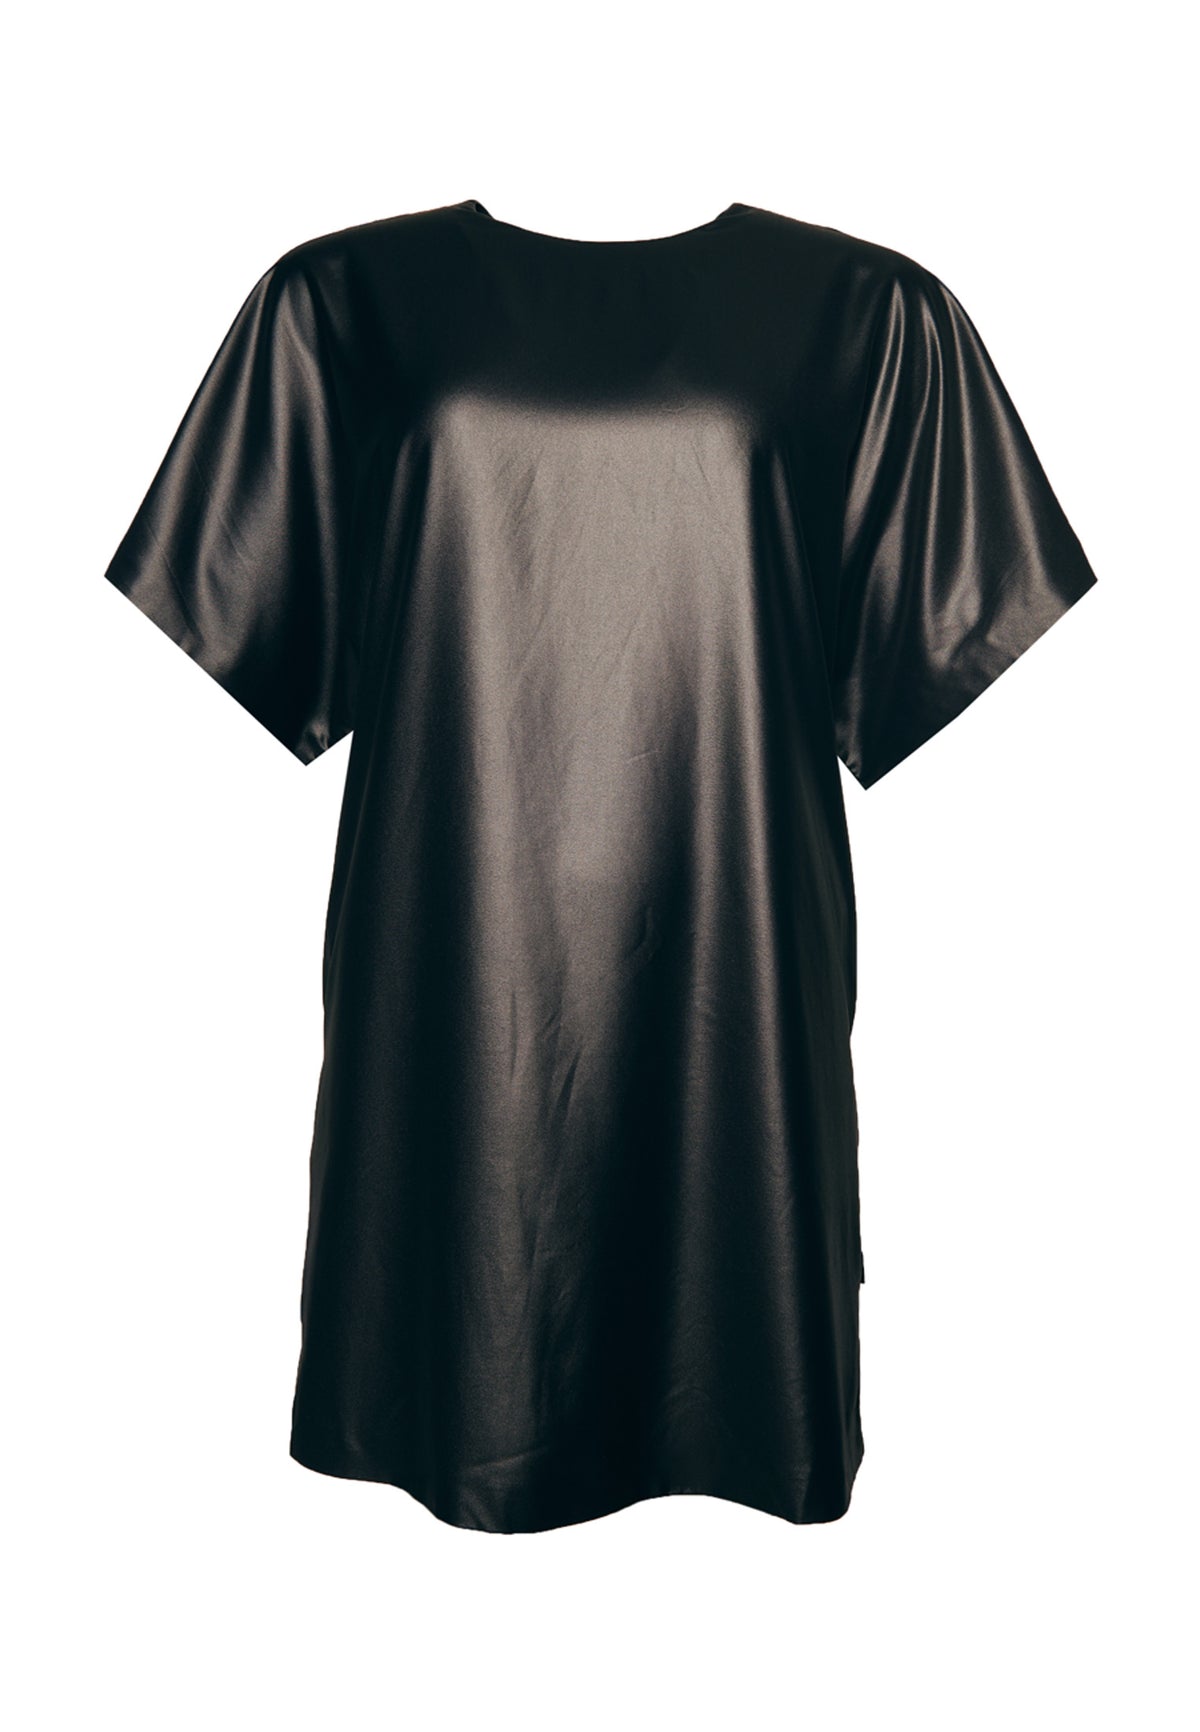 Rocker T-Shirt Dress - Black - Superdry Singapore